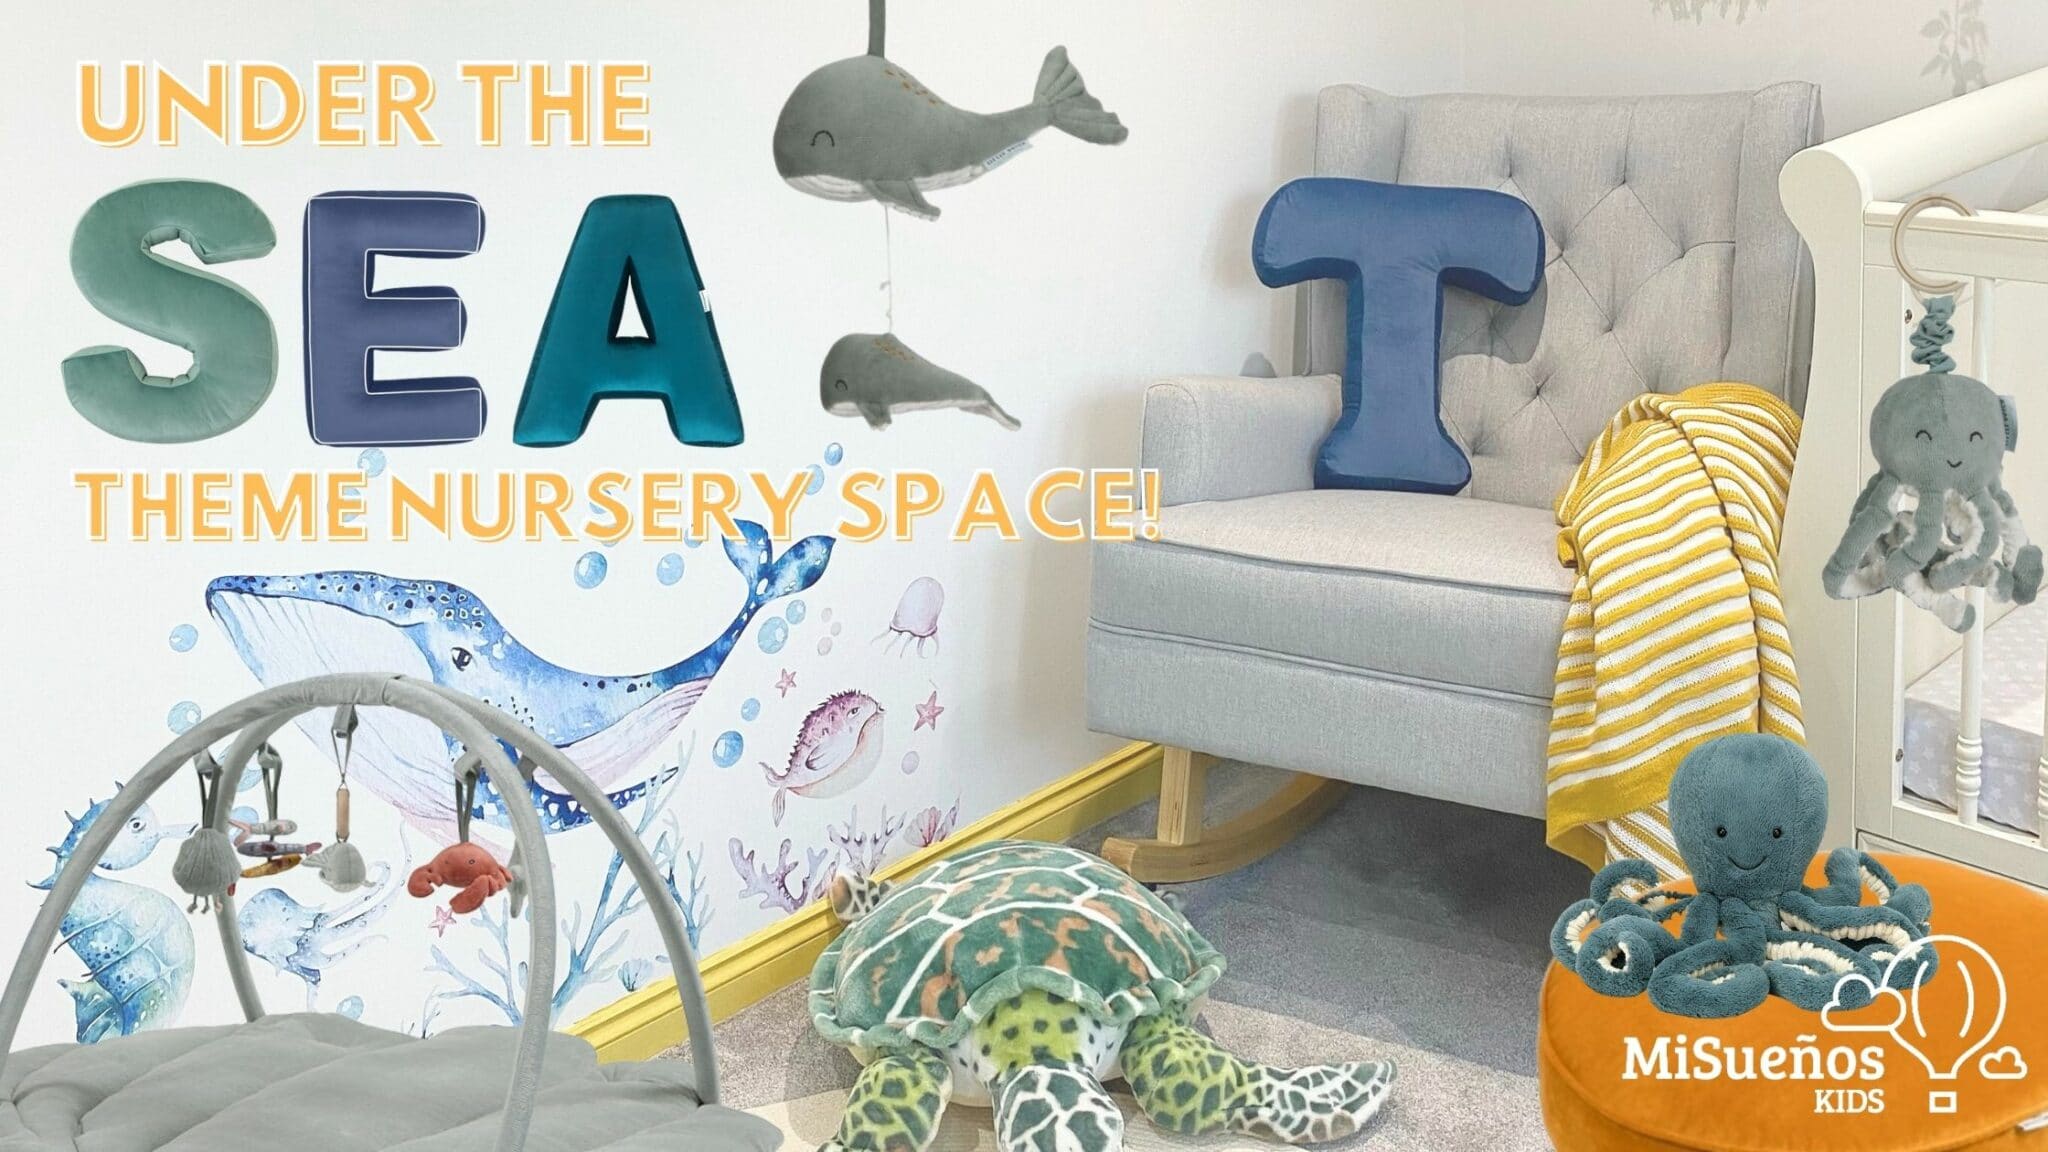 Under The Sea theme nursery design